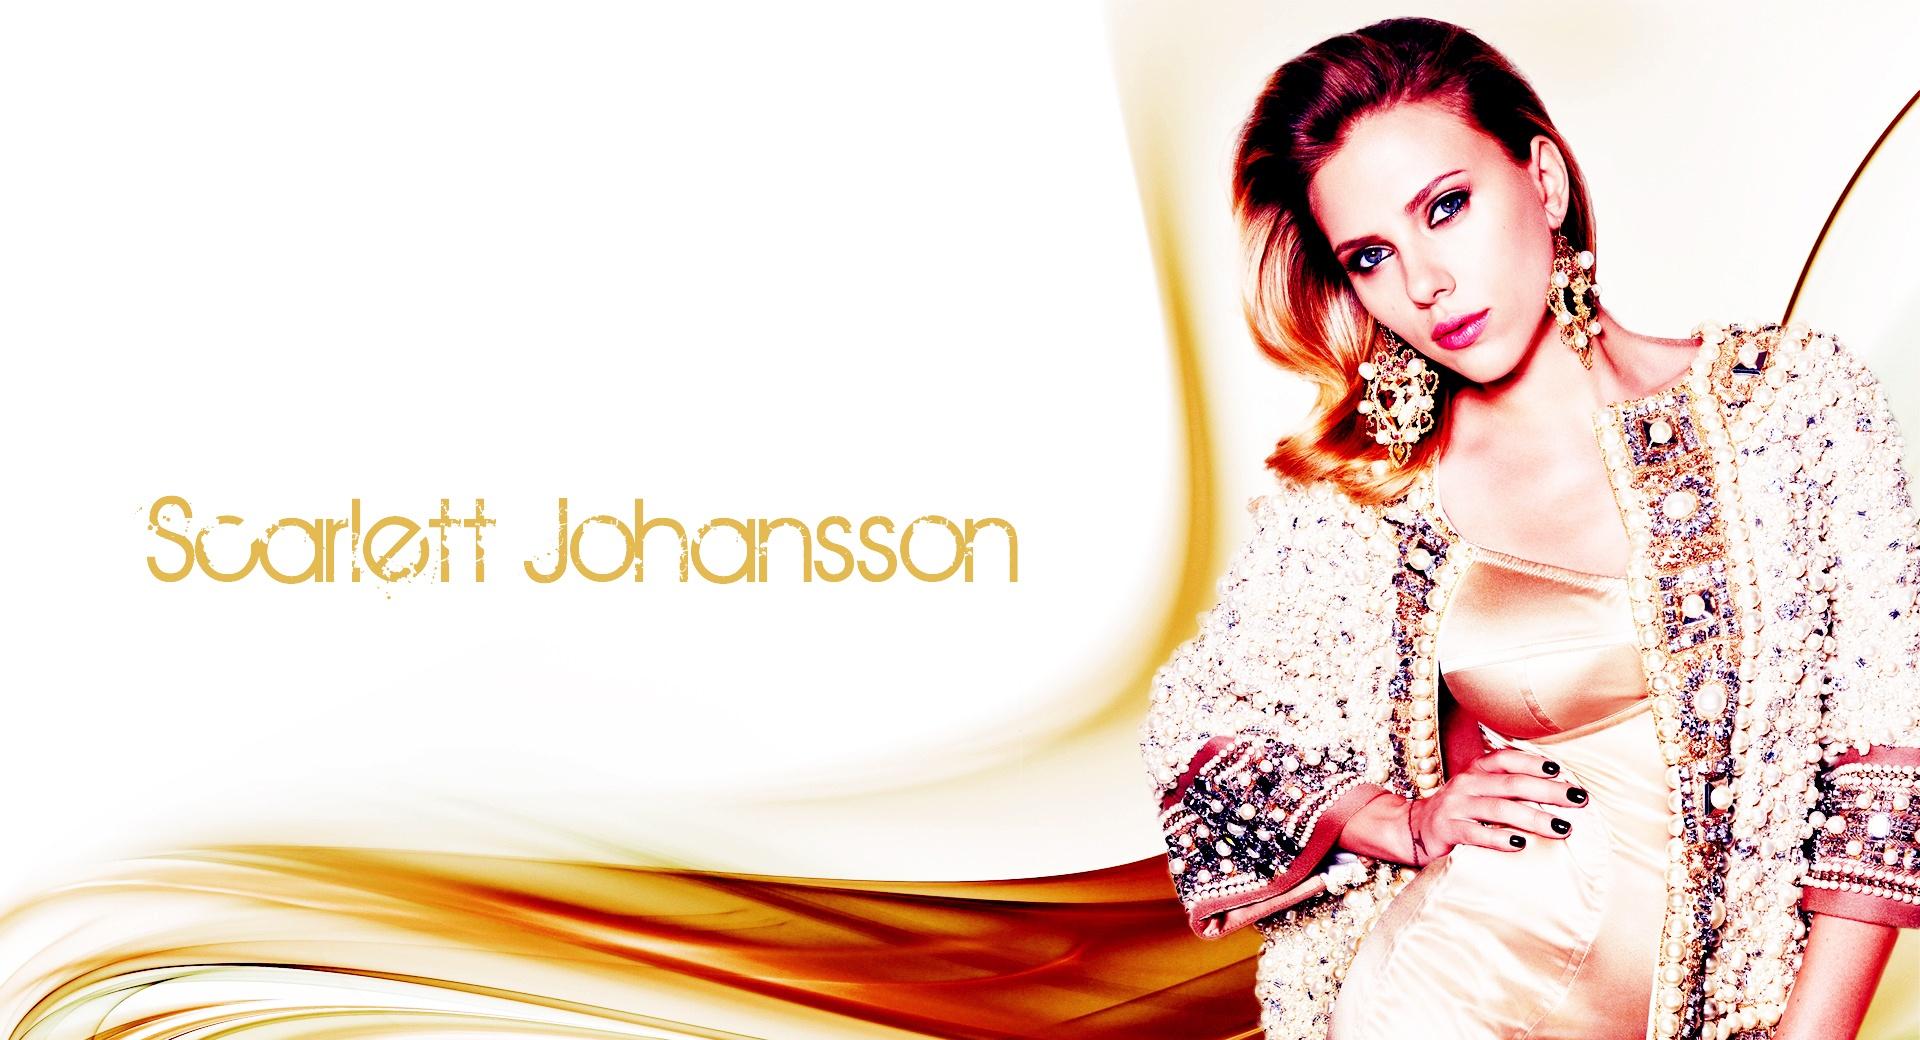 Scarlett Johansson Glamorous at 1024 x 1024 iPad size wallpapers HD quality